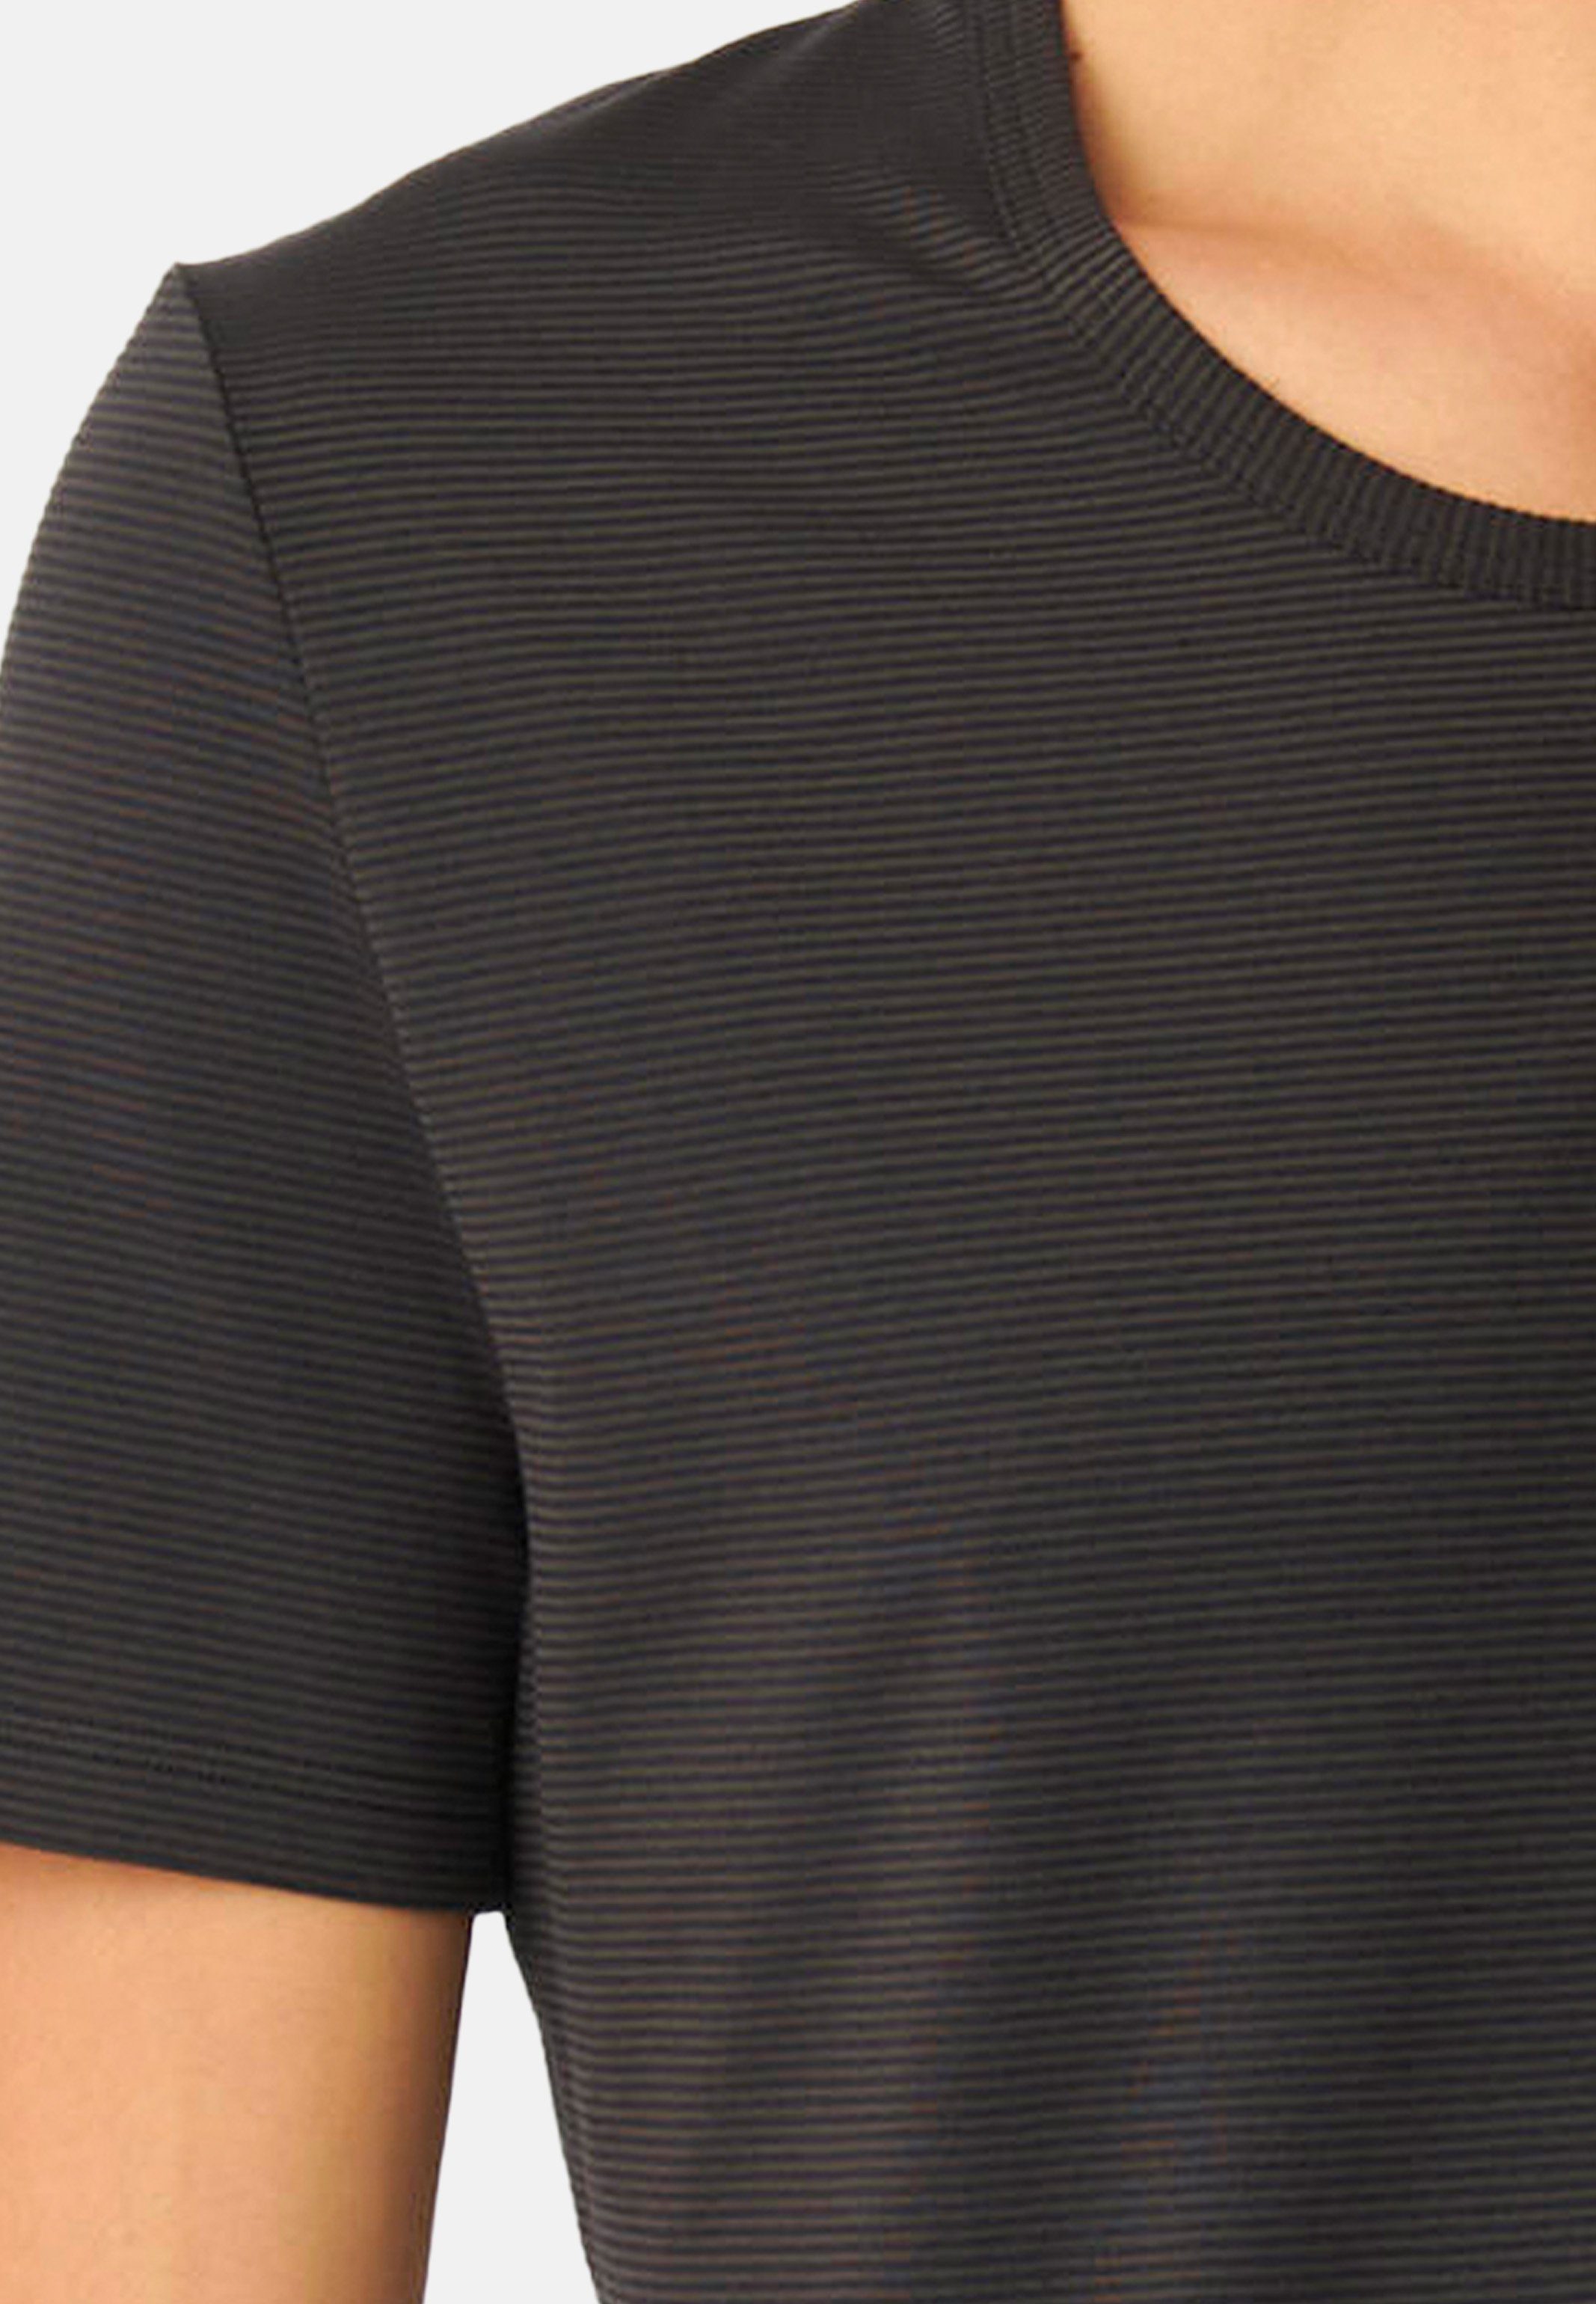 Ever (Spar-Set, - Schwarz Kurzarm Baumwolle Unterhemd 2-St) mit Shirt - T-Shirt Sloggi Kühl-Effekt Cool 2er Pack